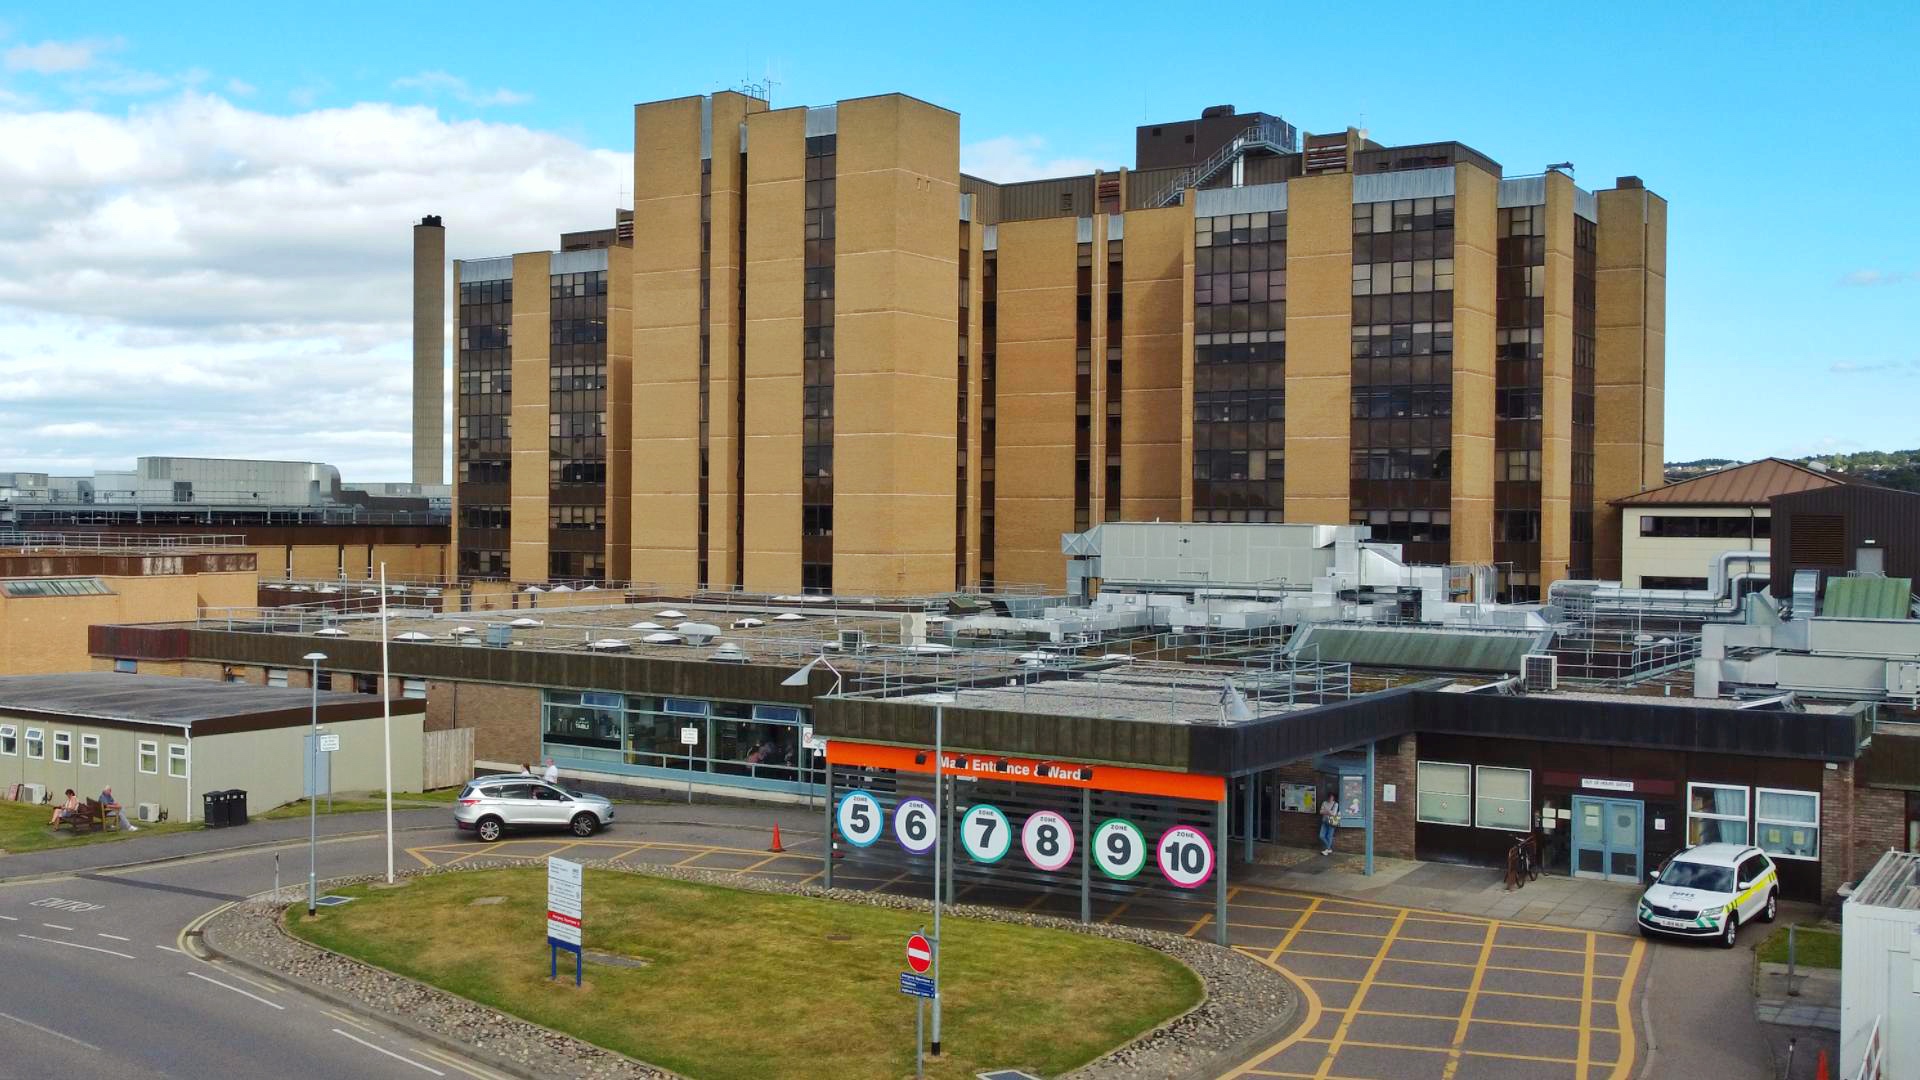 Raigmore Hospital and wards entrance